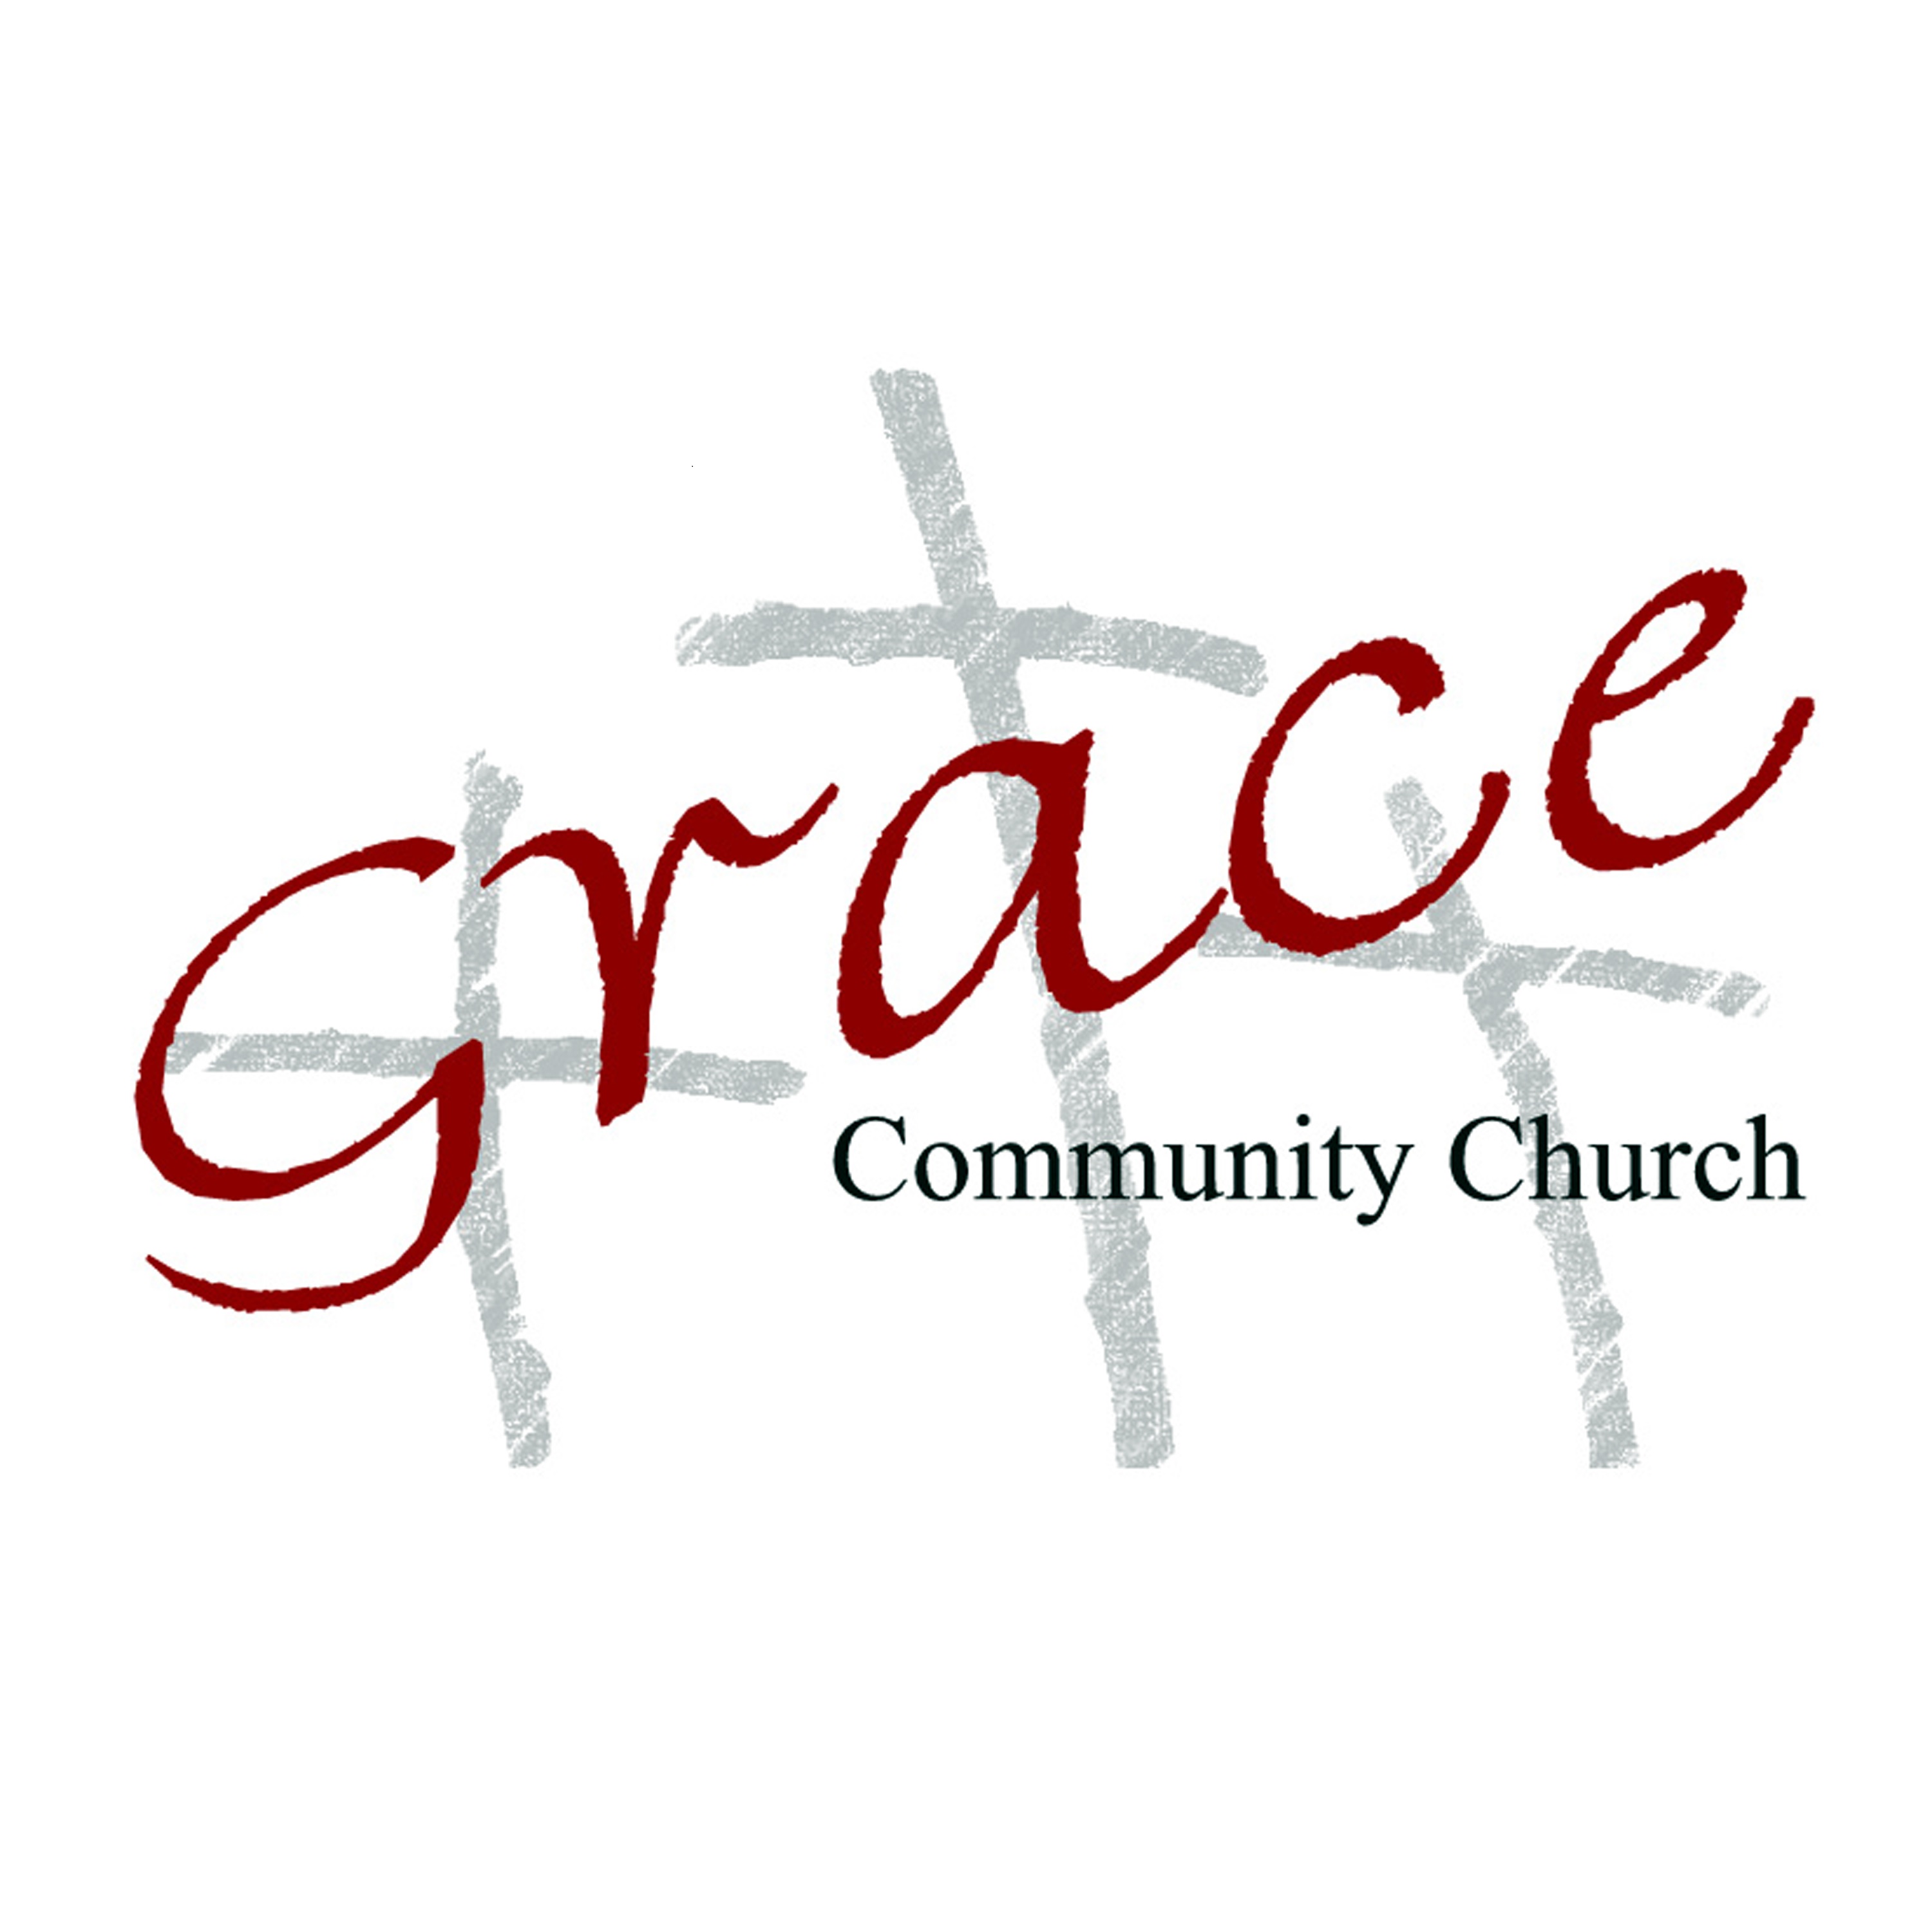 Grace Community Church Downham Market